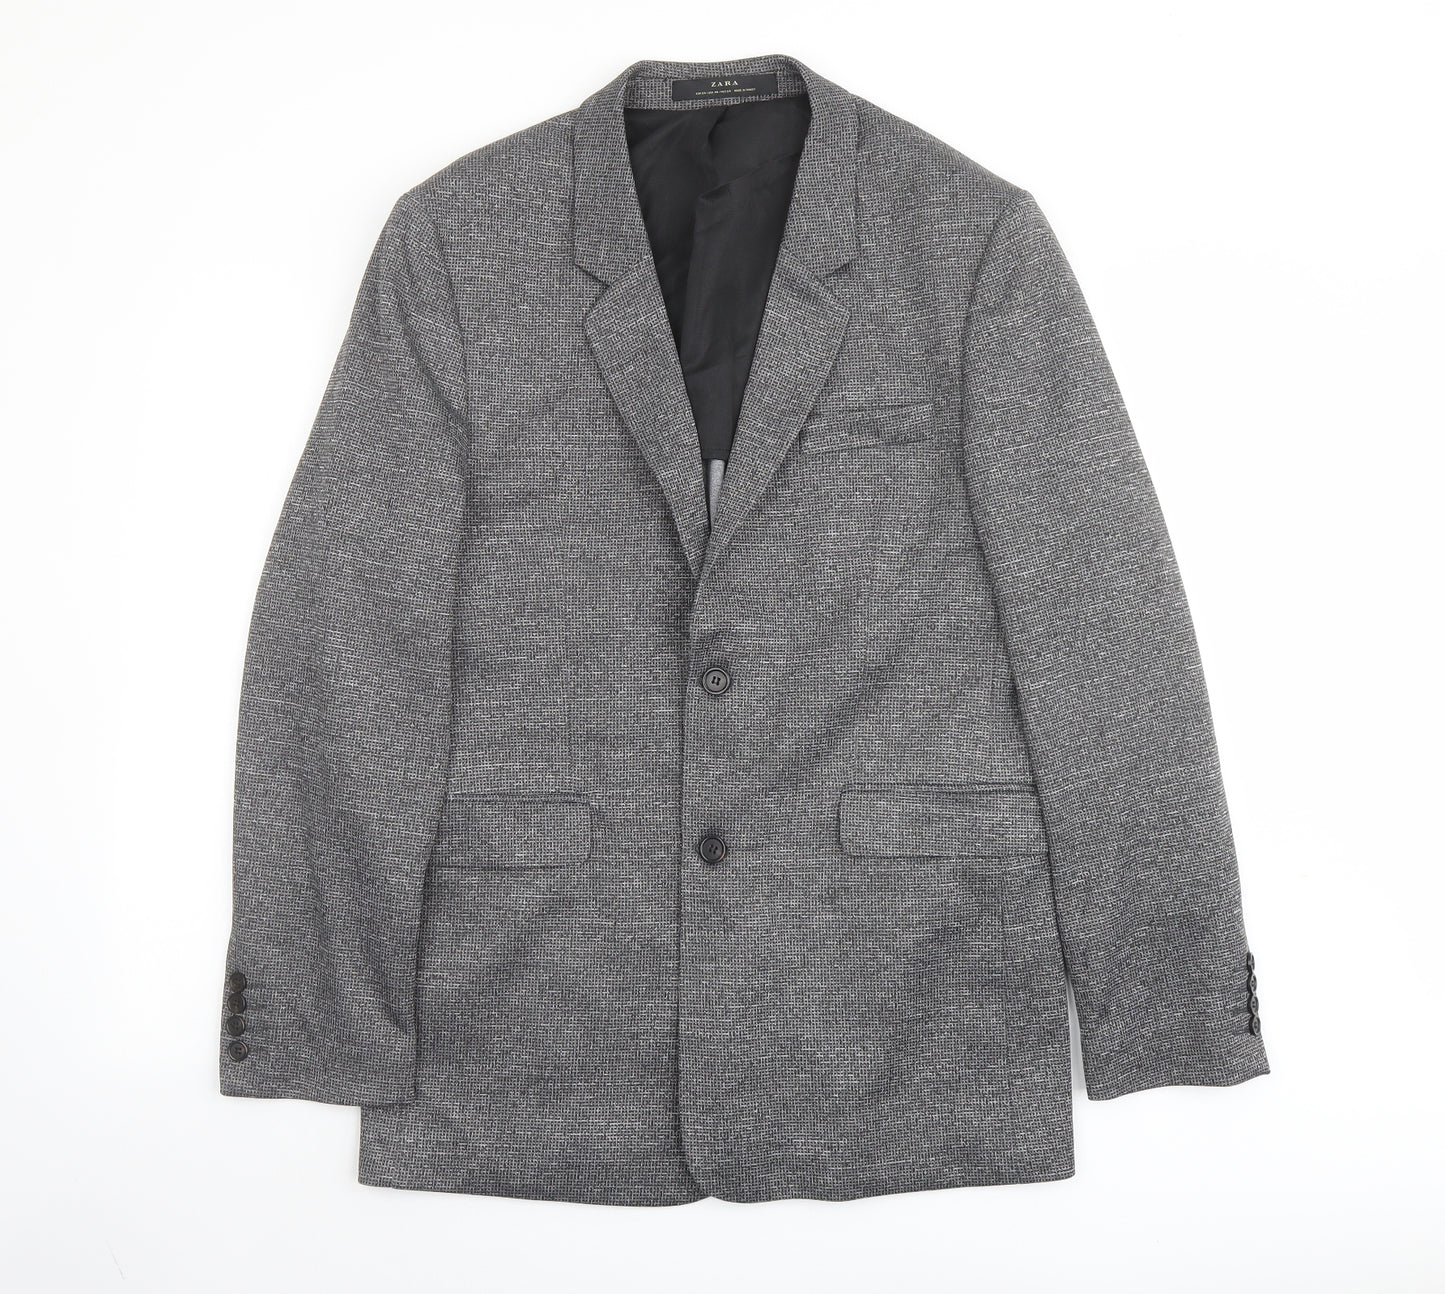 Zara Mens Grey Polyester Jacket Suit Jacket Size 42 Regular